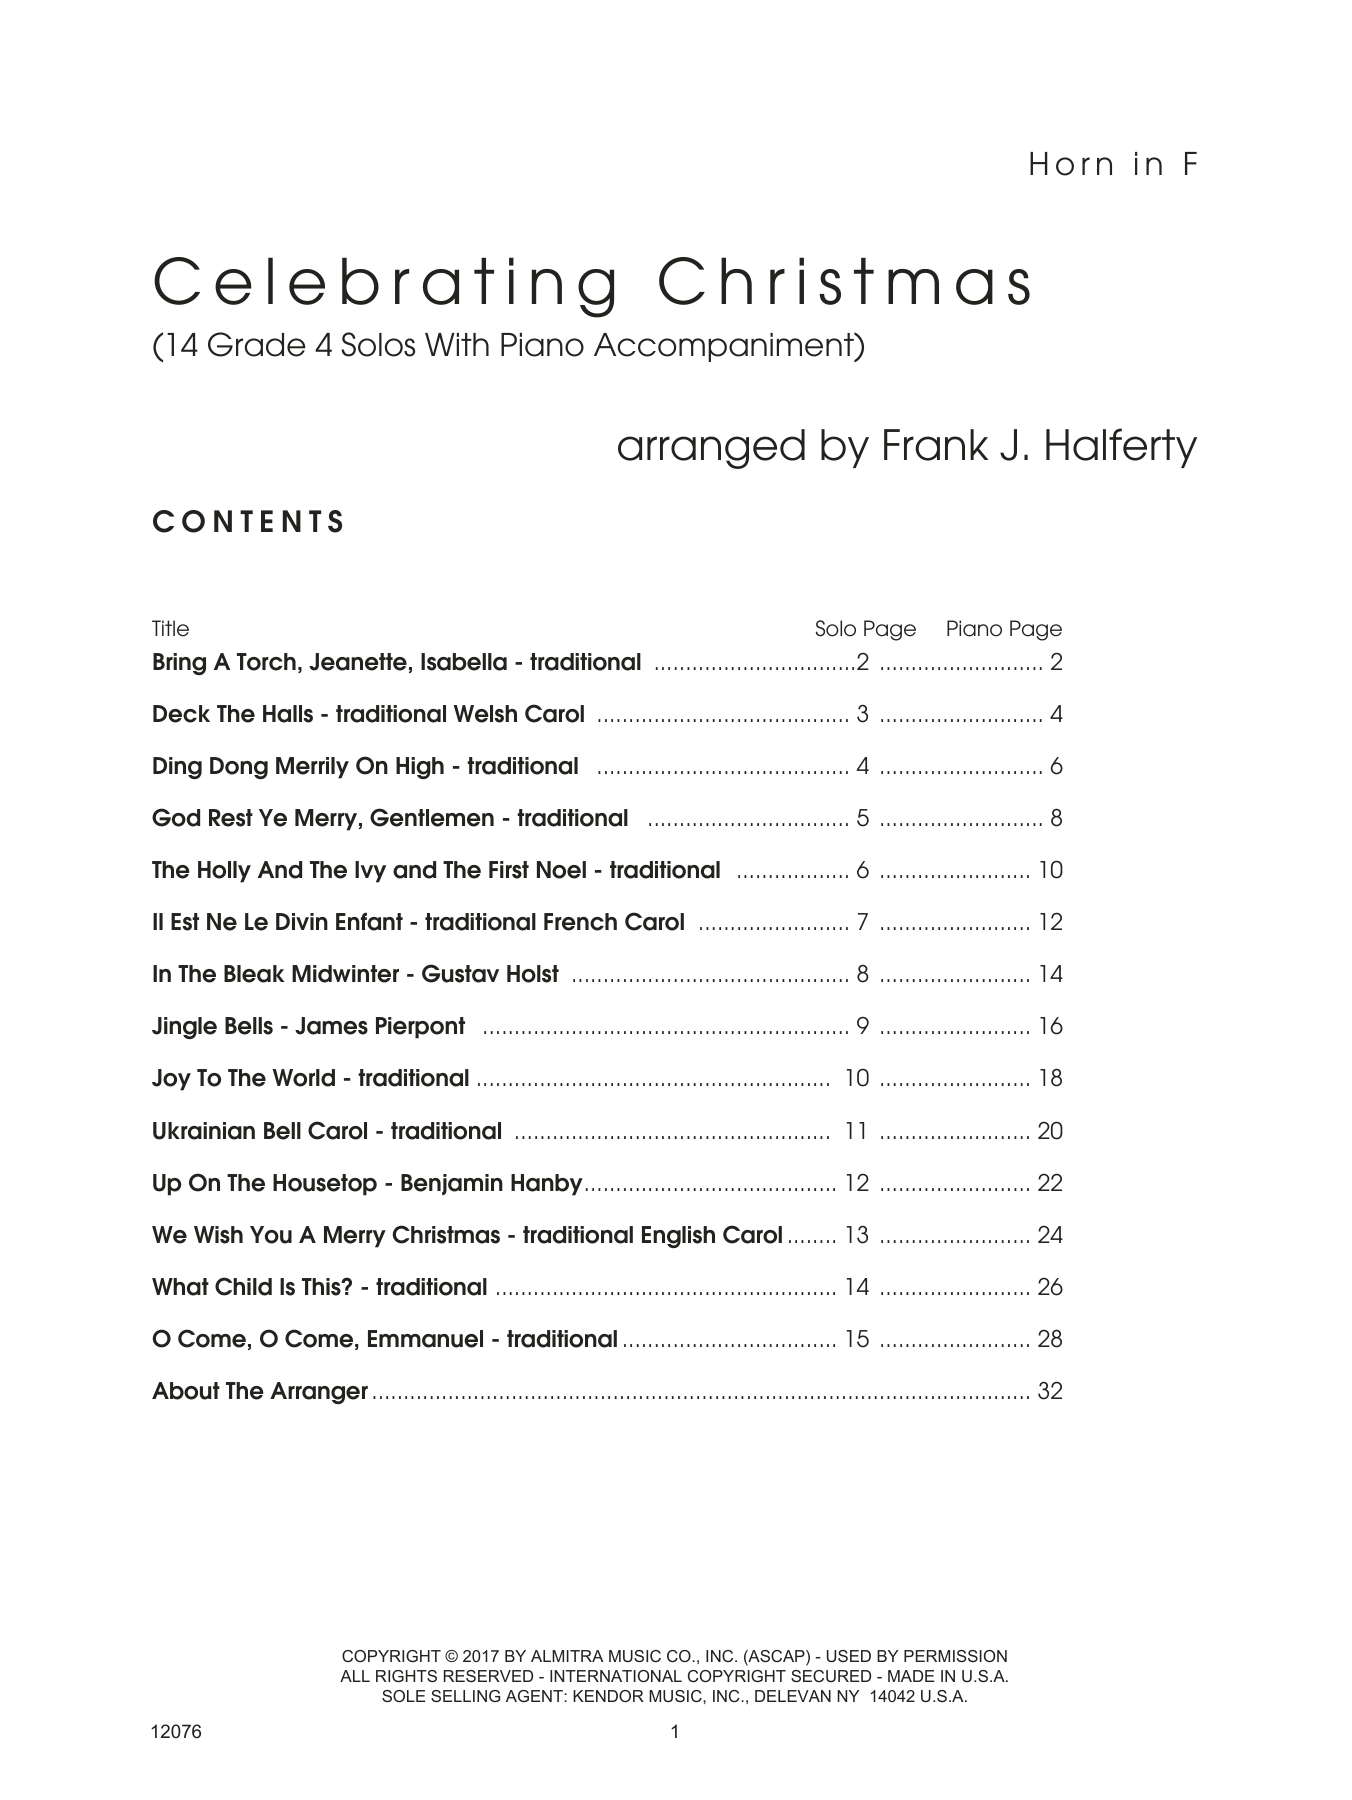 Download Frank J. Halferty Celebrating Christmas (14 Grade 4 Solos Sheet Music